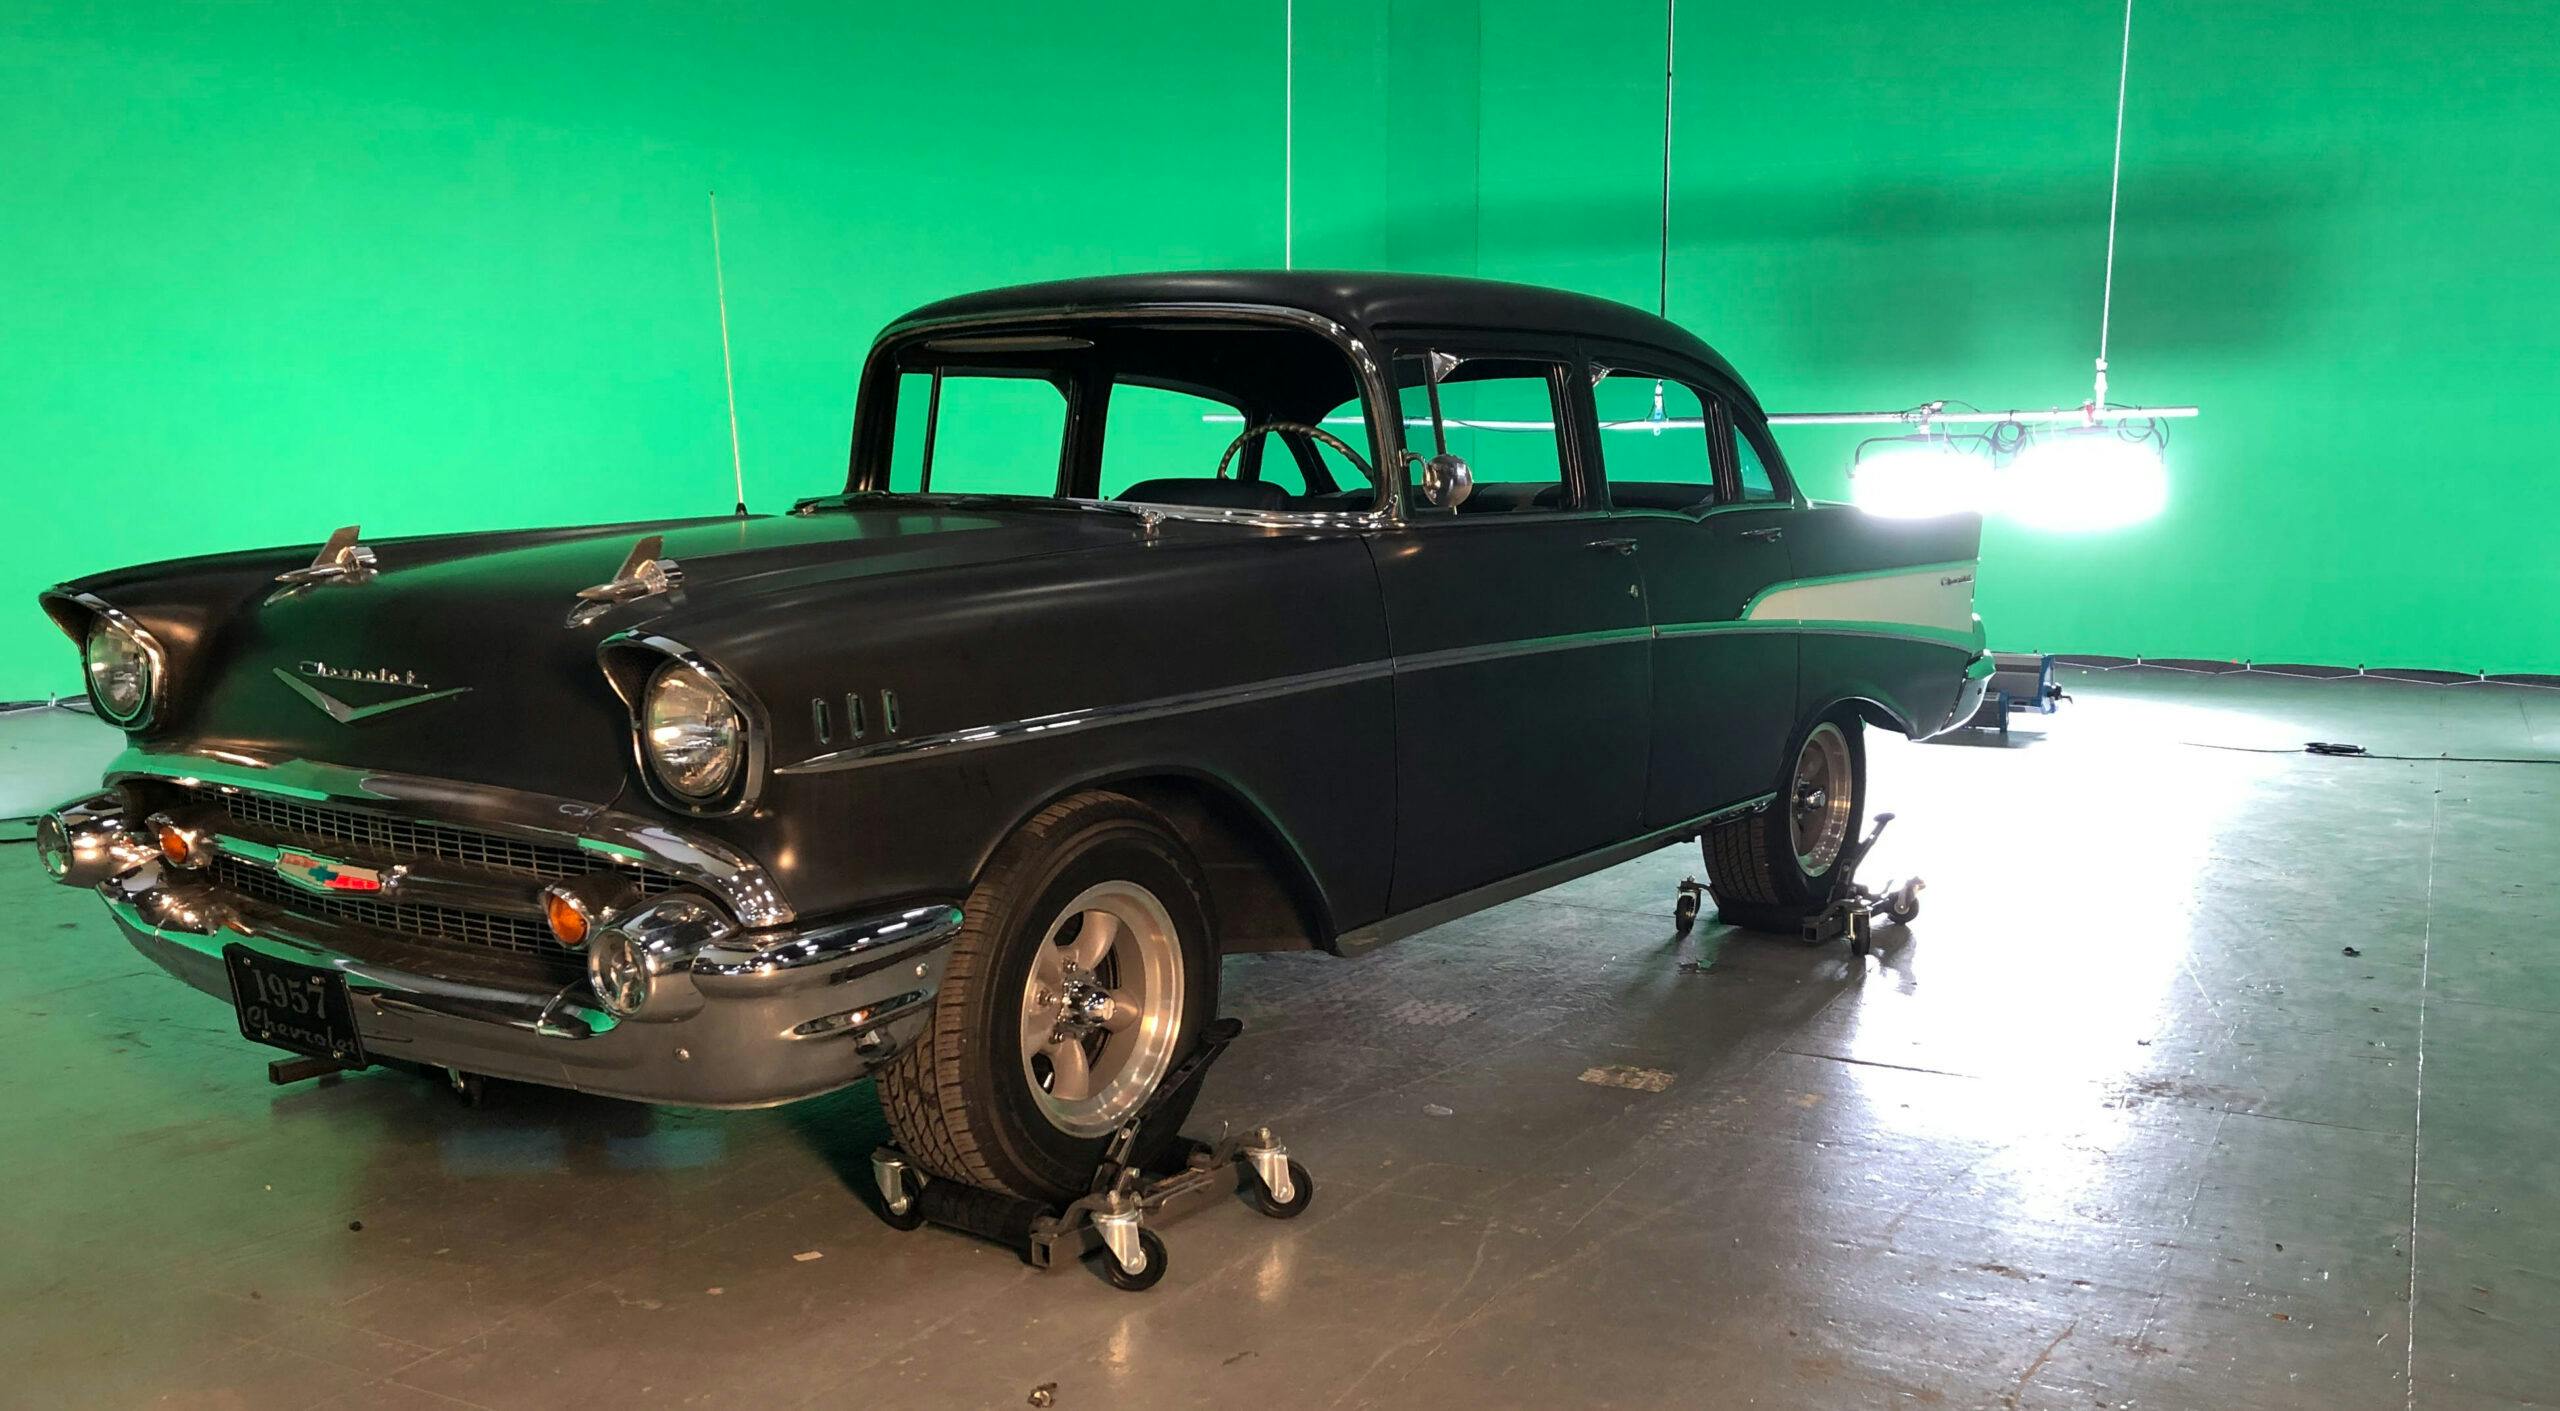 Classic two tone chevrolet movie car prop in green screen studio